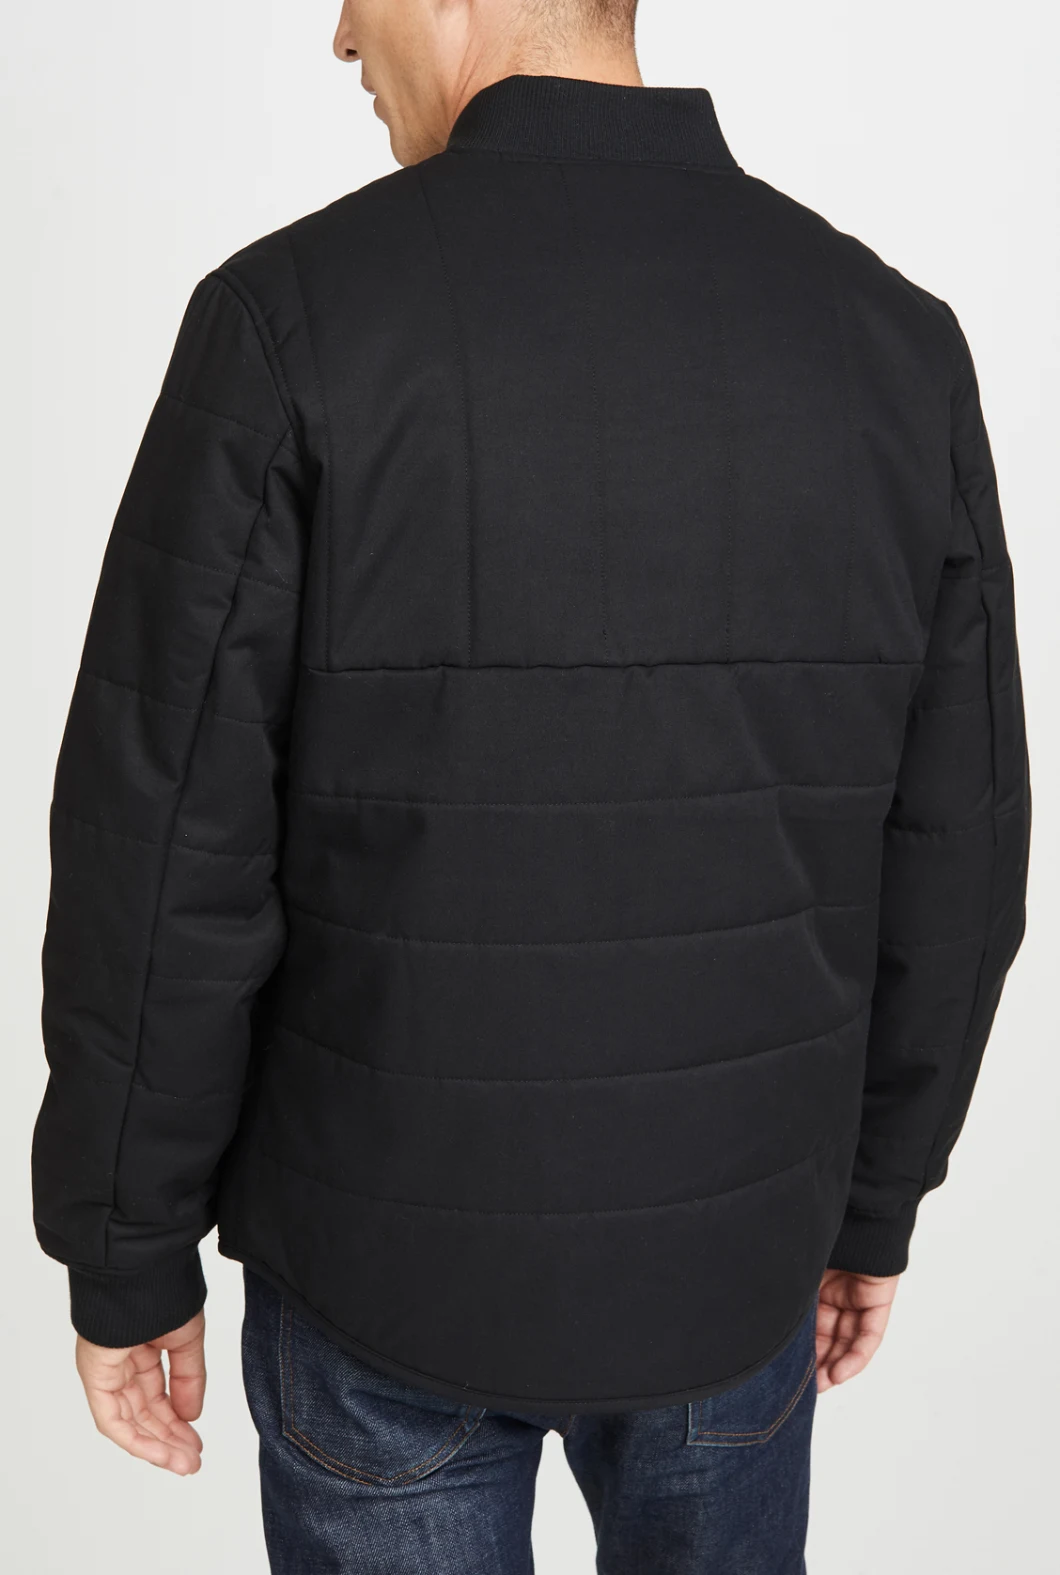 China Hot Product Top Quality Riding Jackets for Men Sports Jackets Custom Windbreaker Jacket